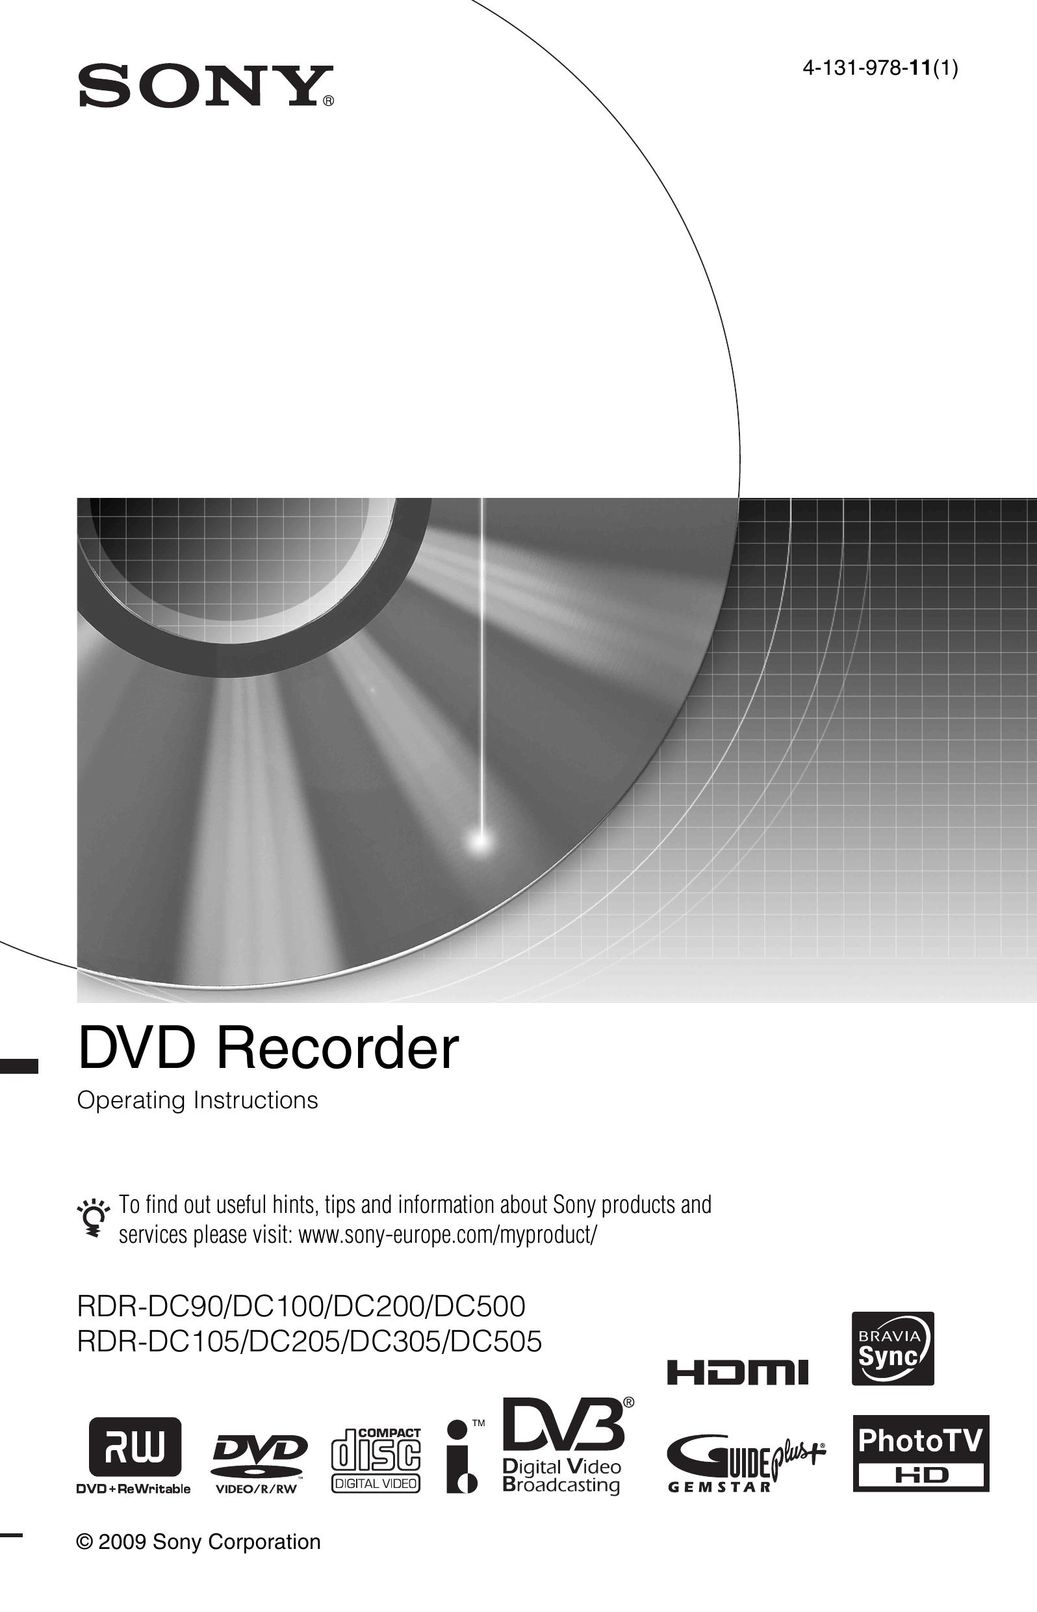 Sony RDR-DC105 DVD Recorder User Manual